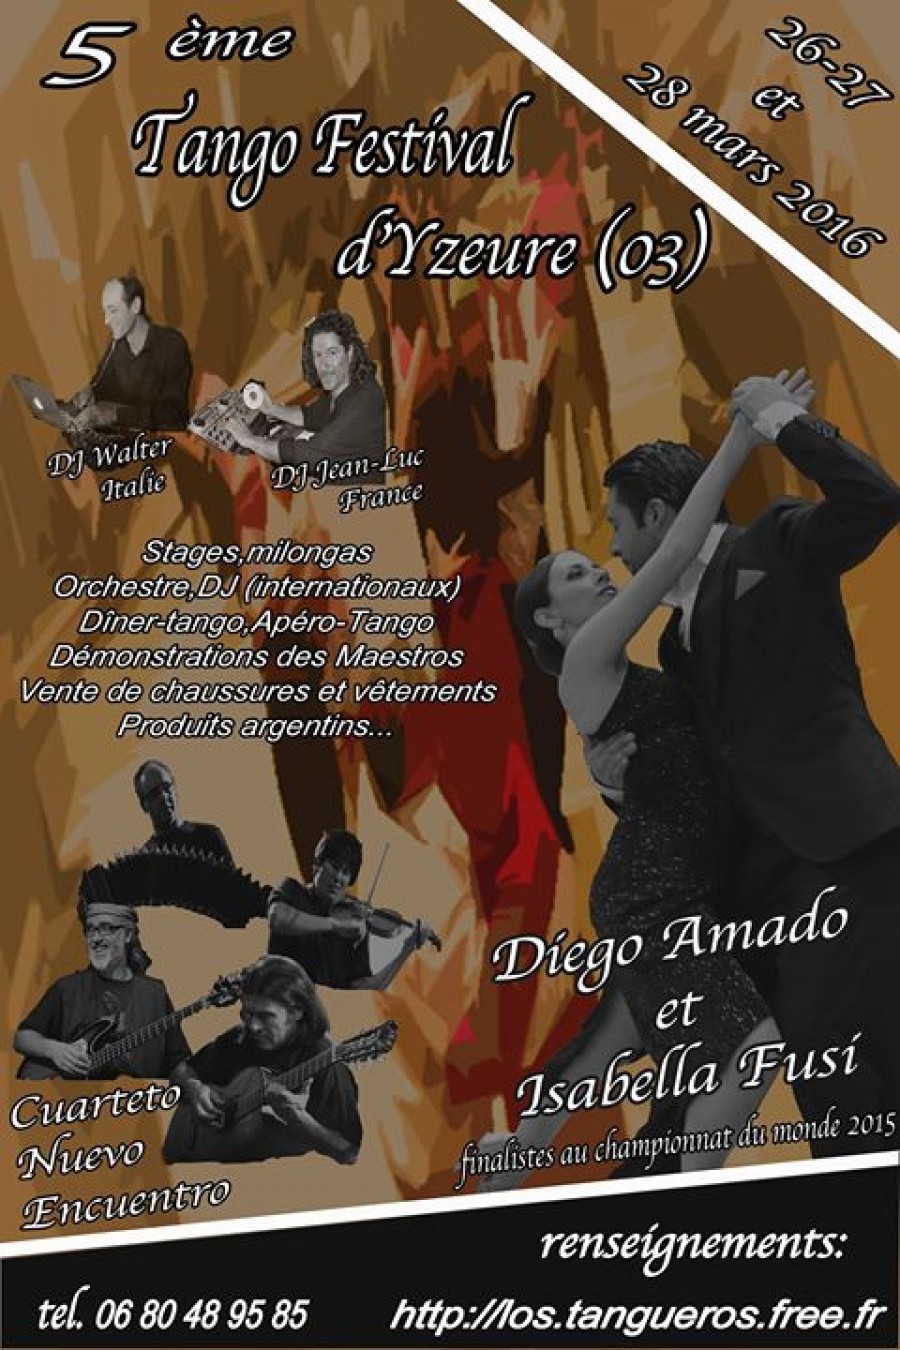 5eme Tango Festival d Yzeure